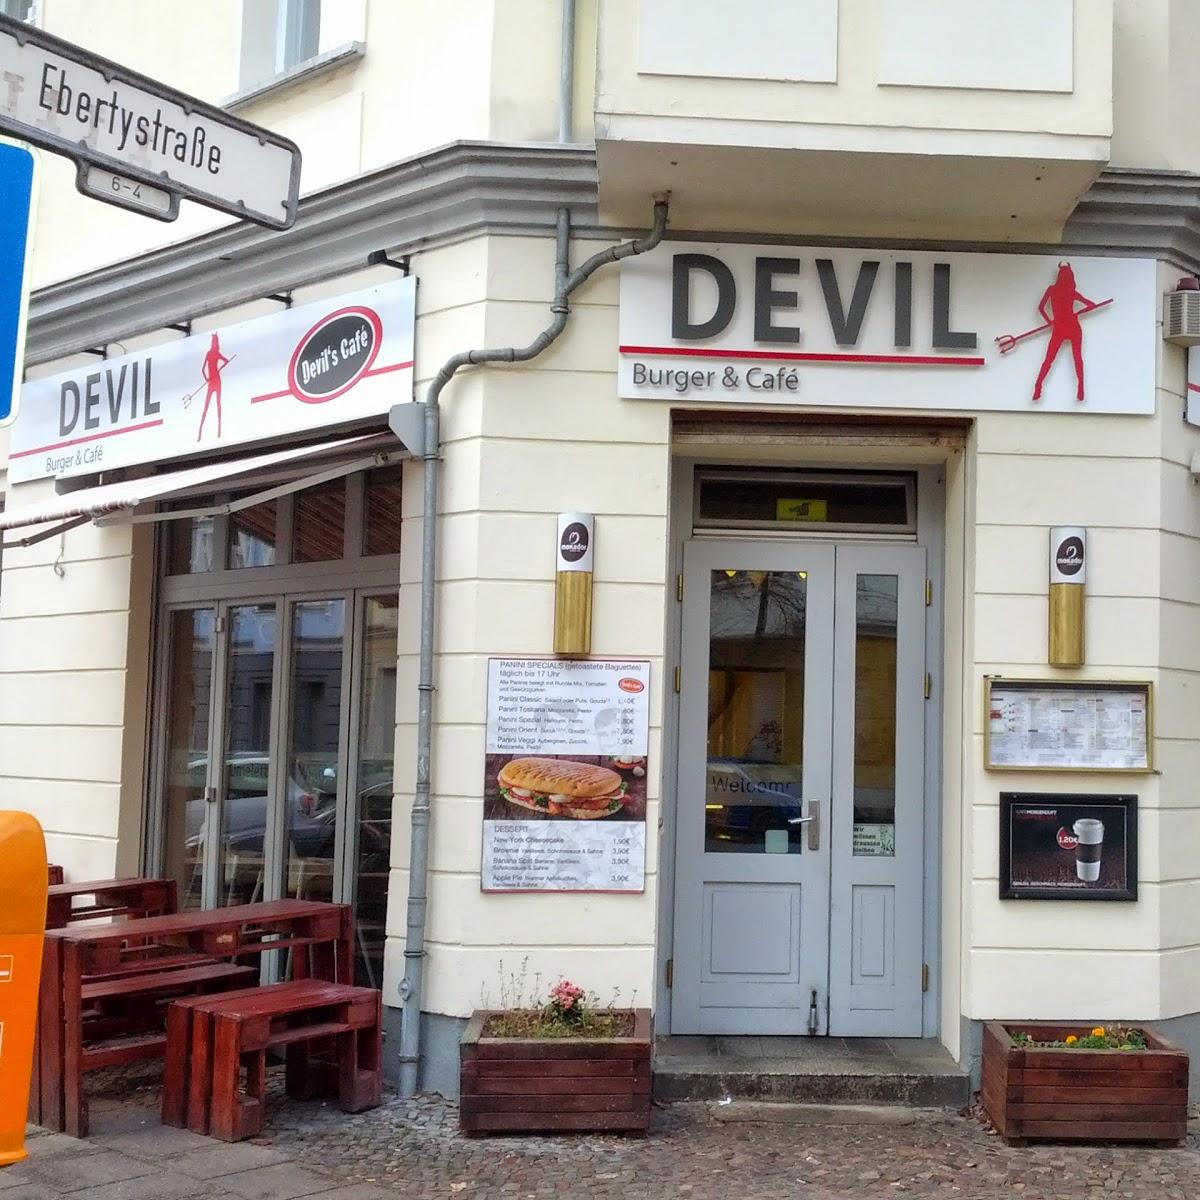 Restaurant "Devil Burger" in Berlin